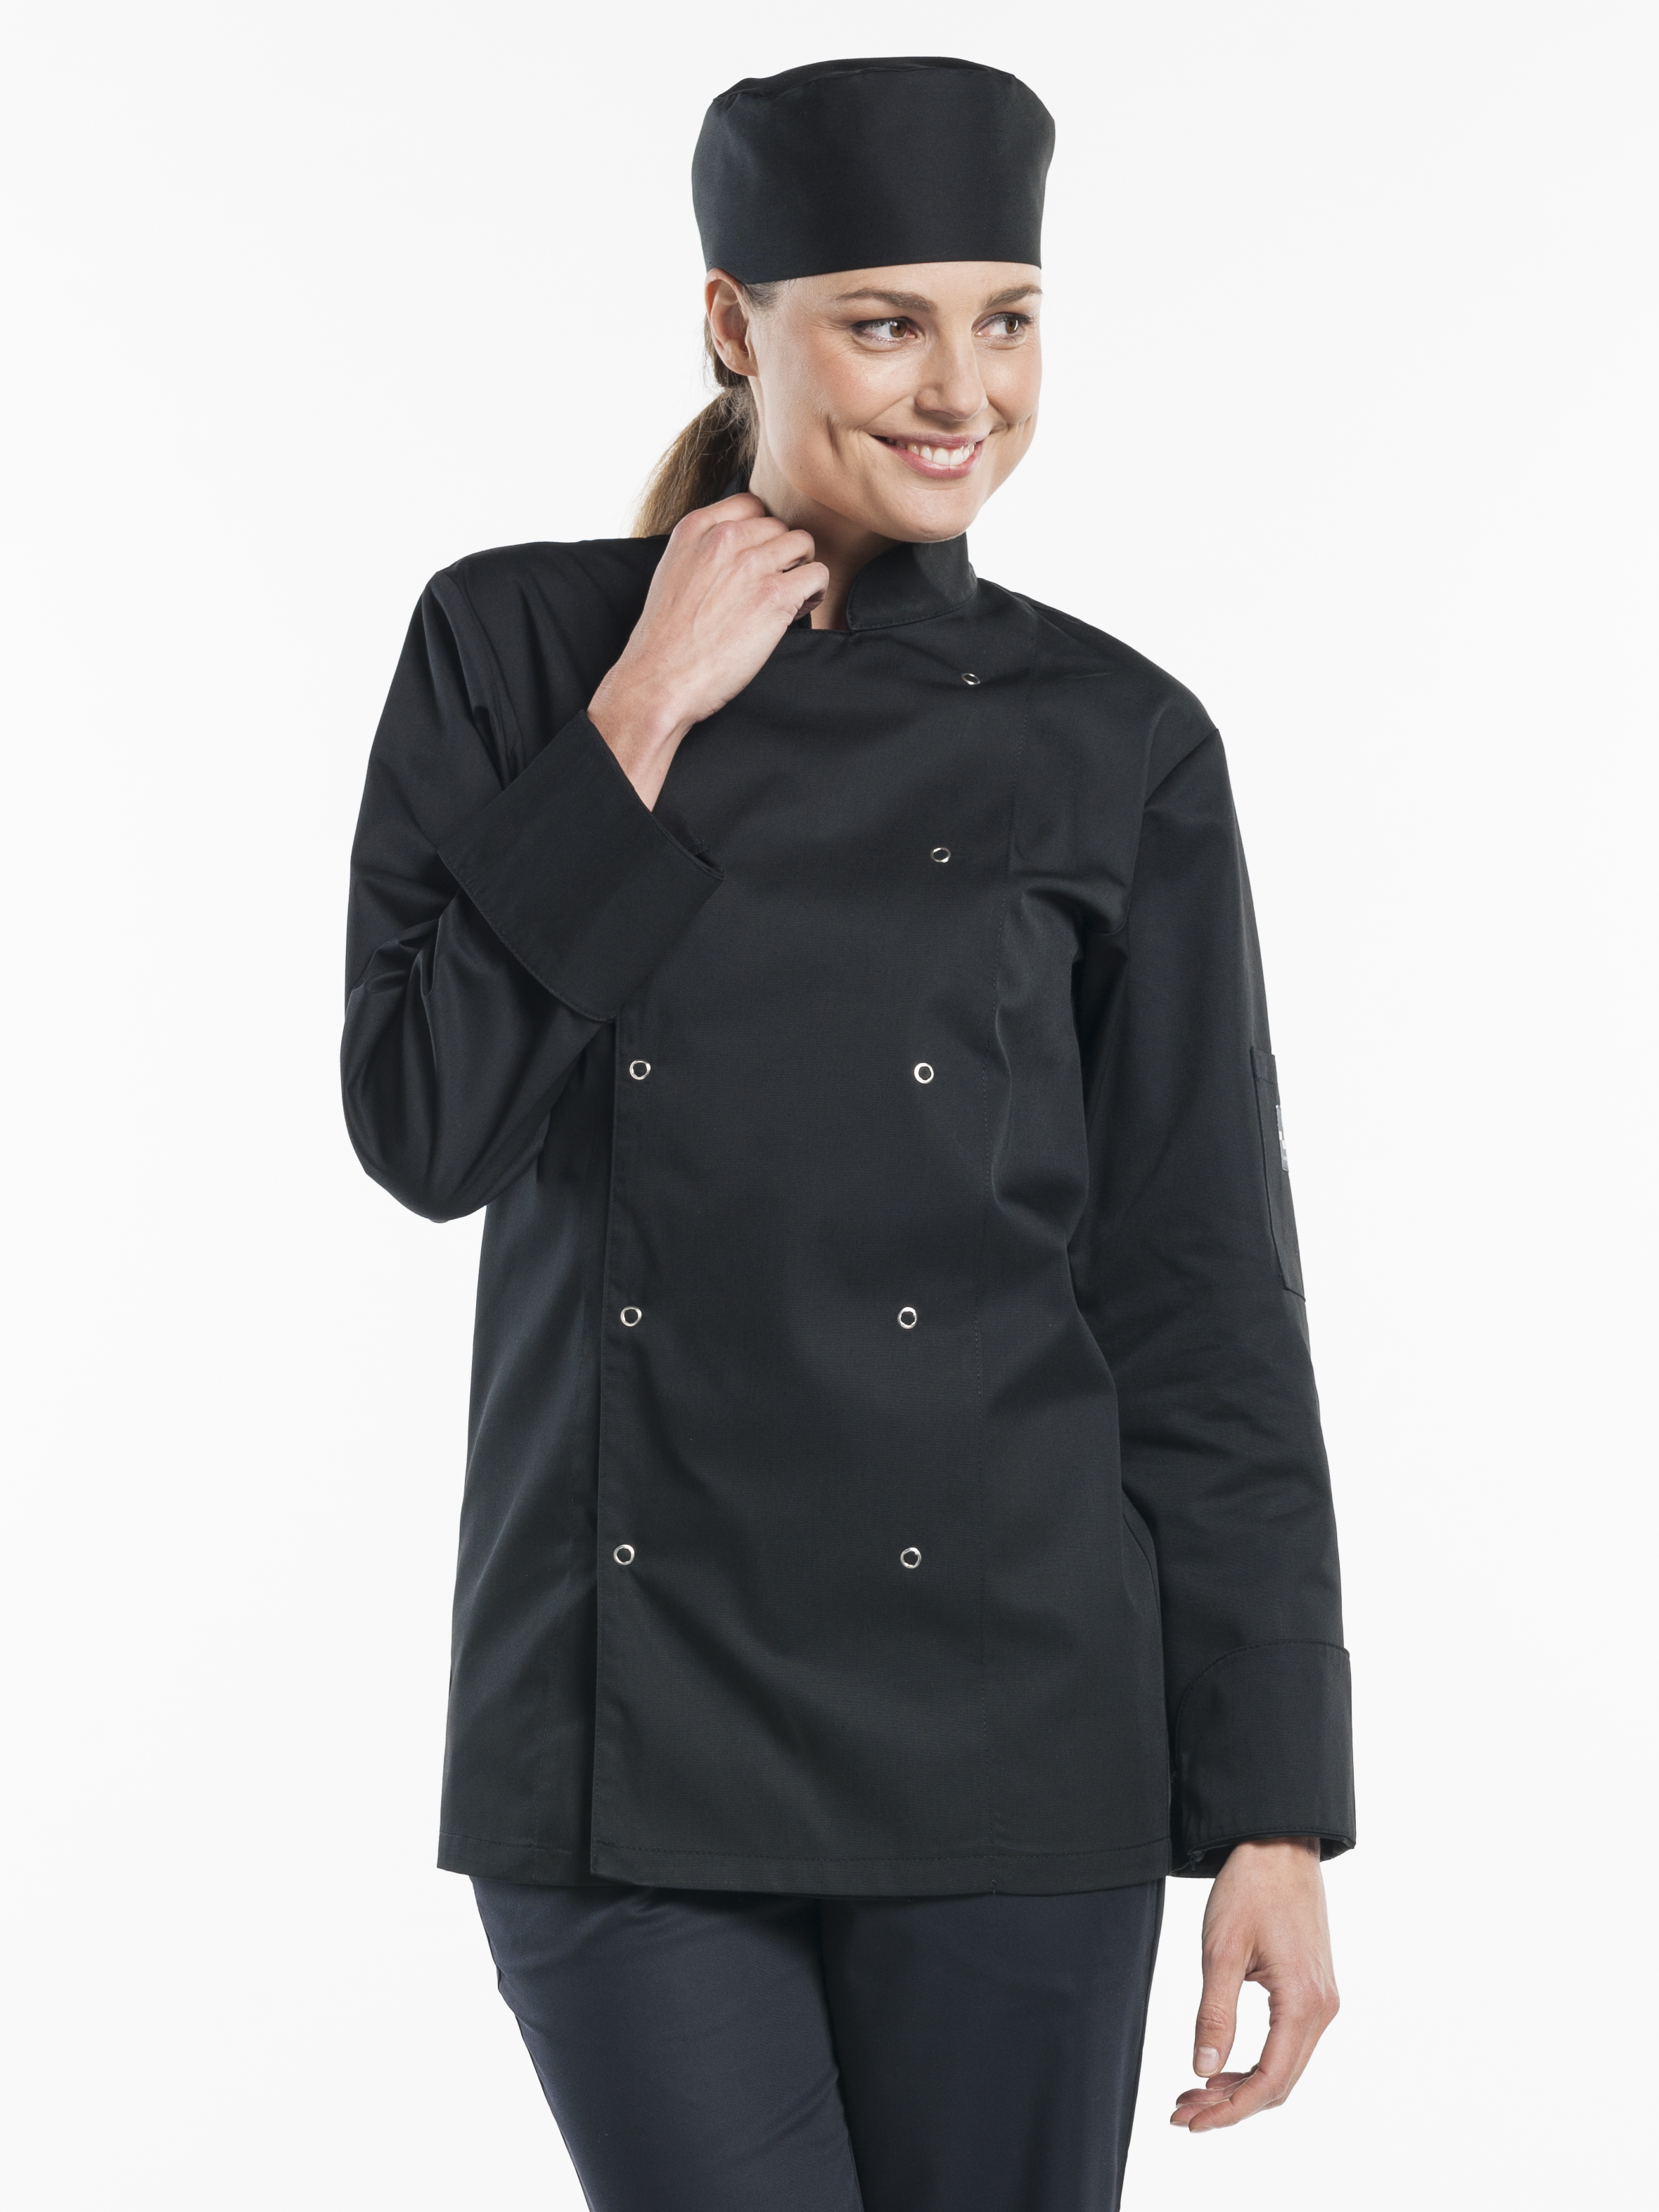 48814 Chef jacket hilton poco black maat l